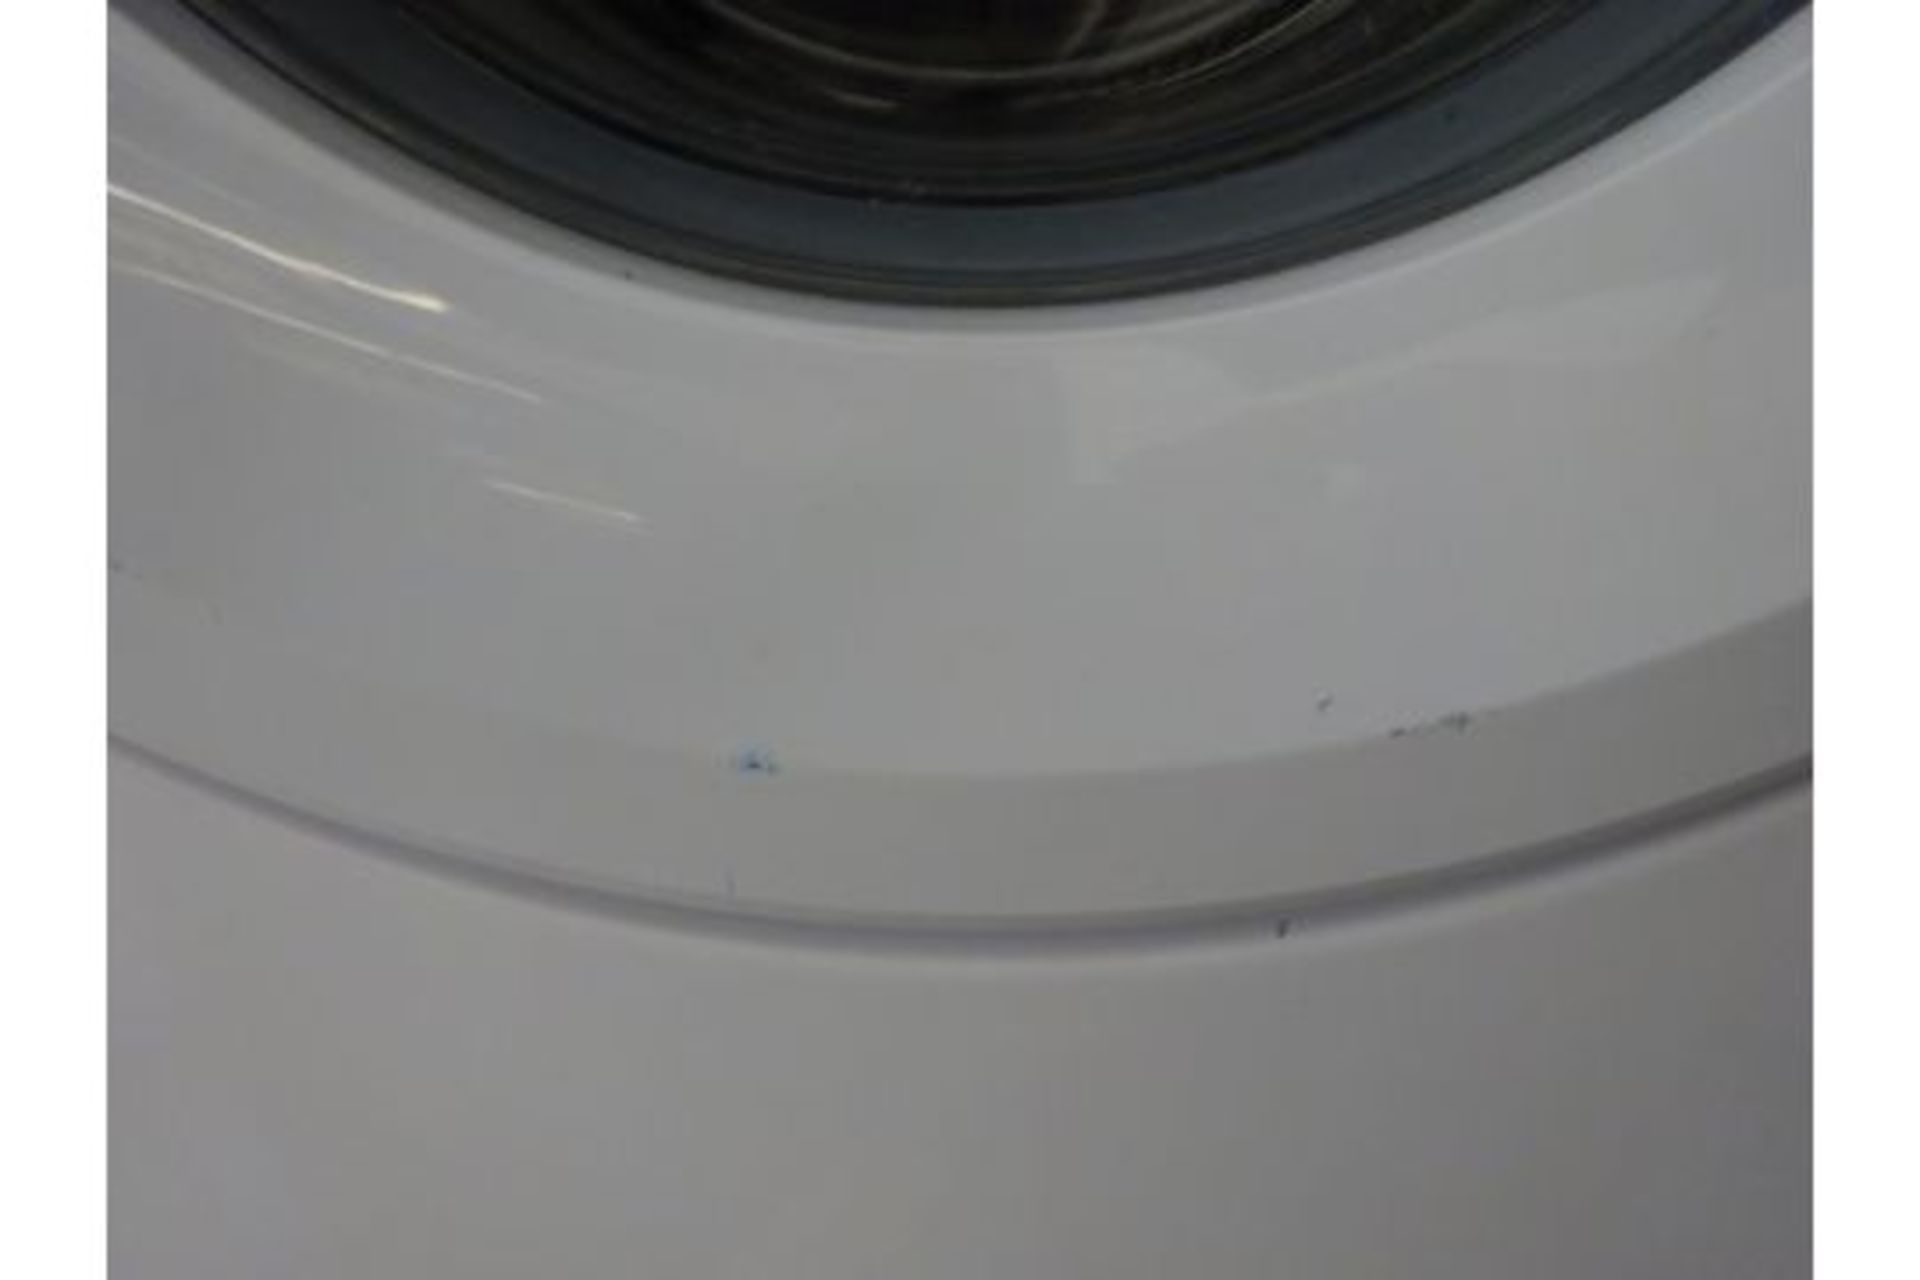 Bush WMDF612W 6KG 1200 Spin Washing Machine - White - ARGOS RRP £179.99 - Image 6 of 6